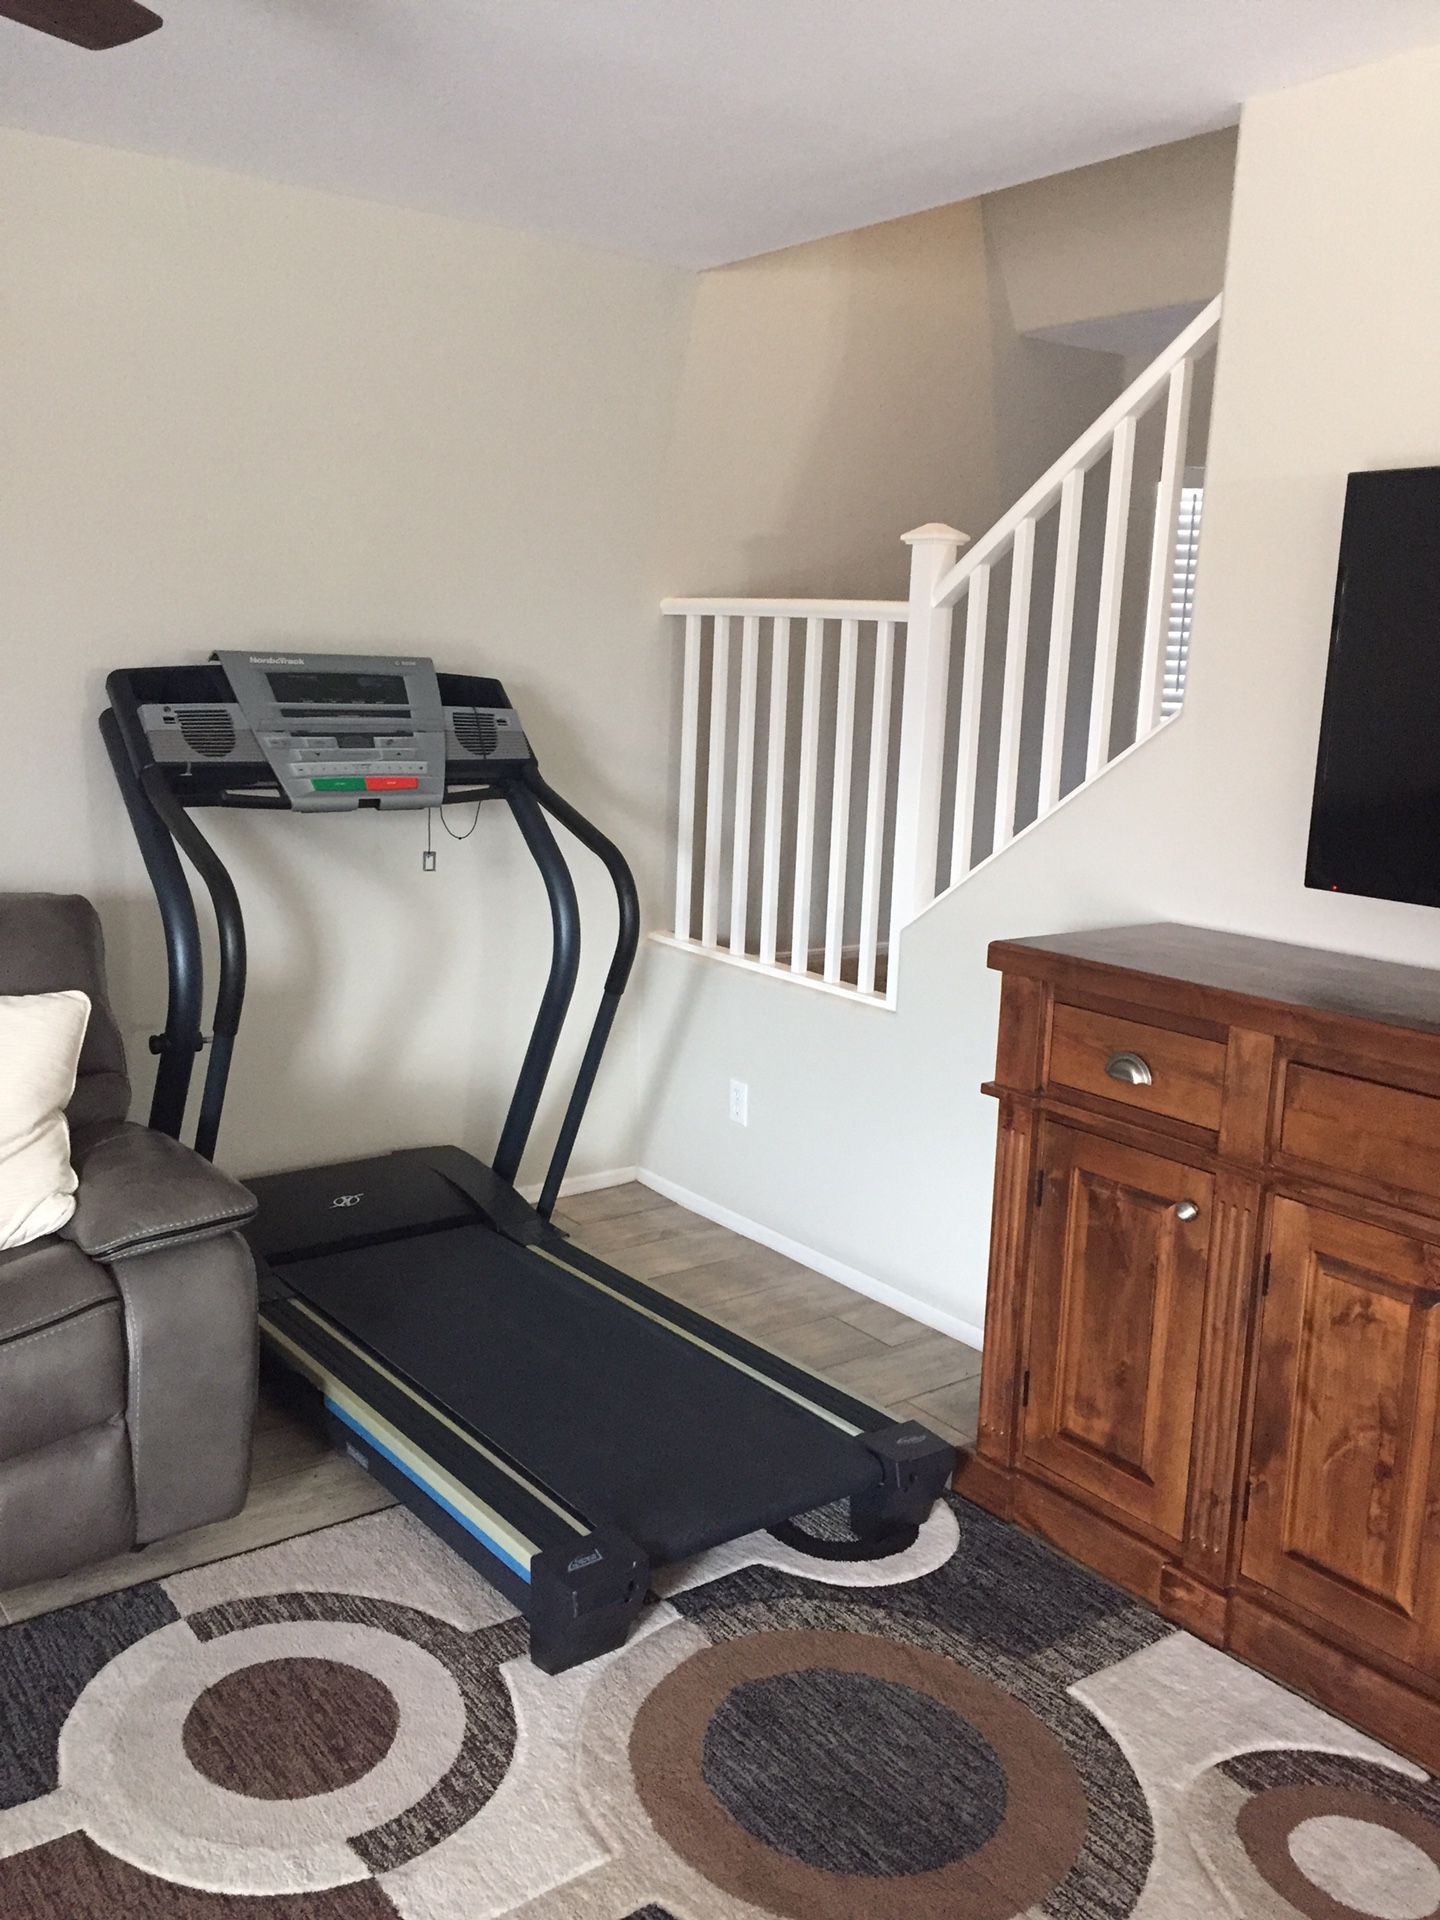 NordicTrack C2000 treadmill